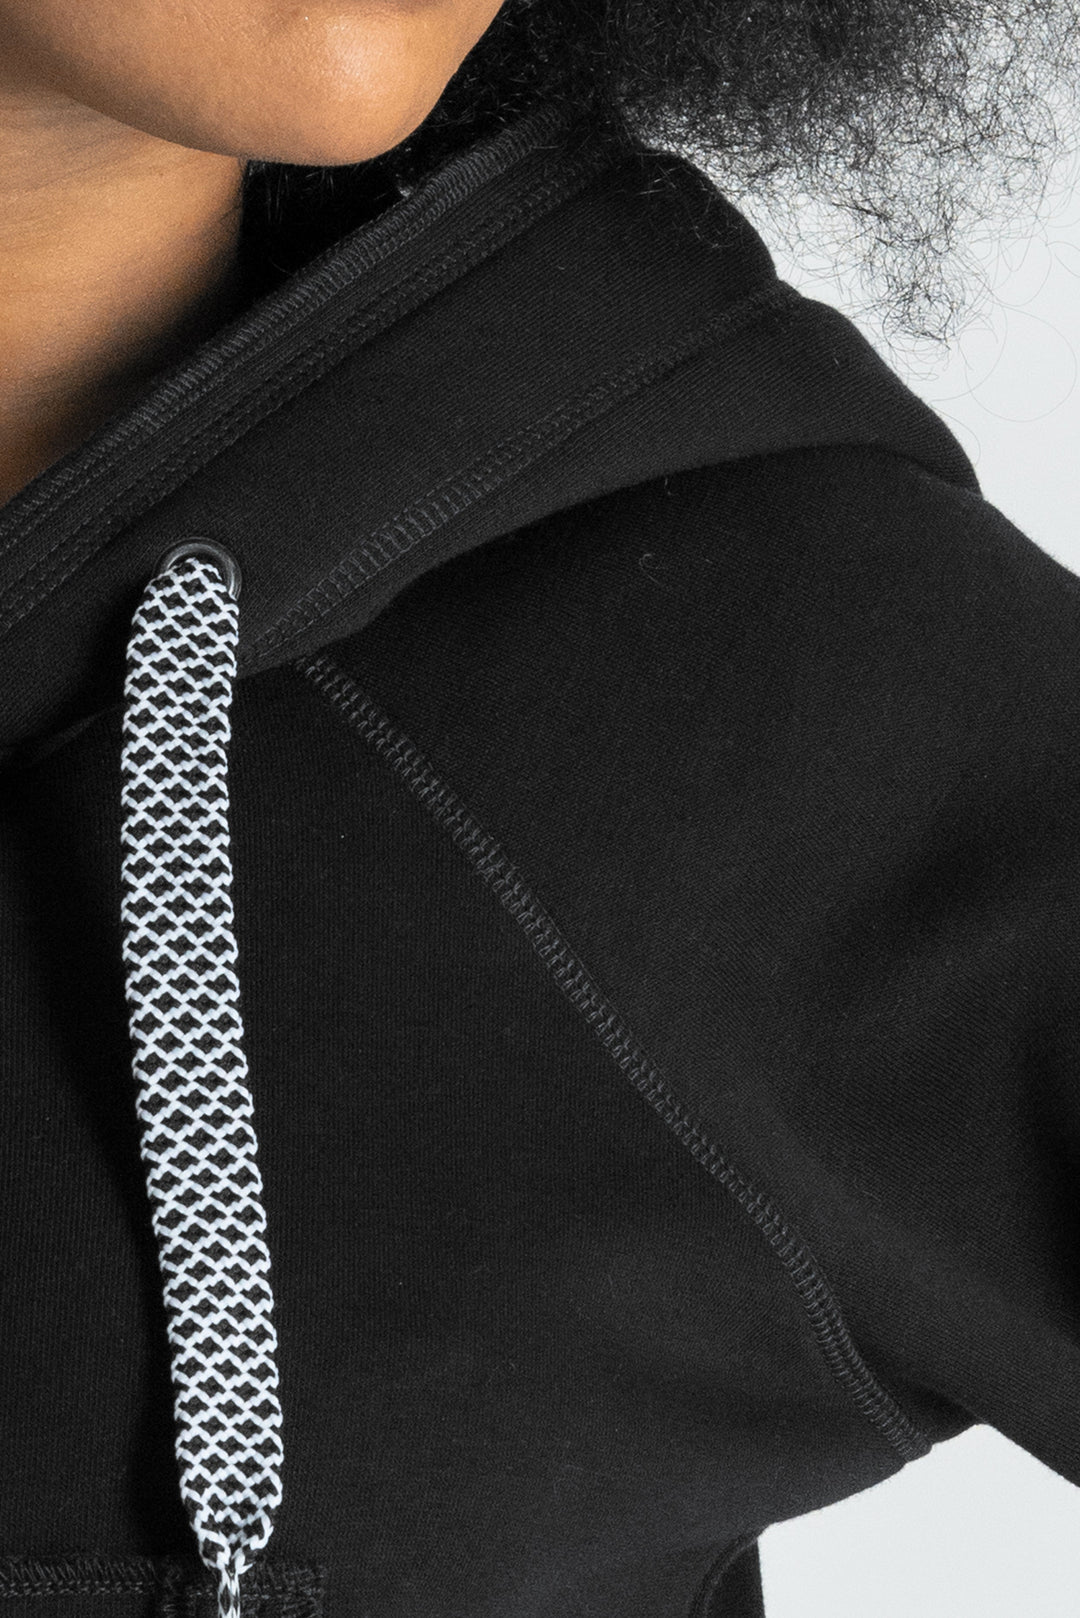 Black Zipper Hooded Sports Sweatshirts